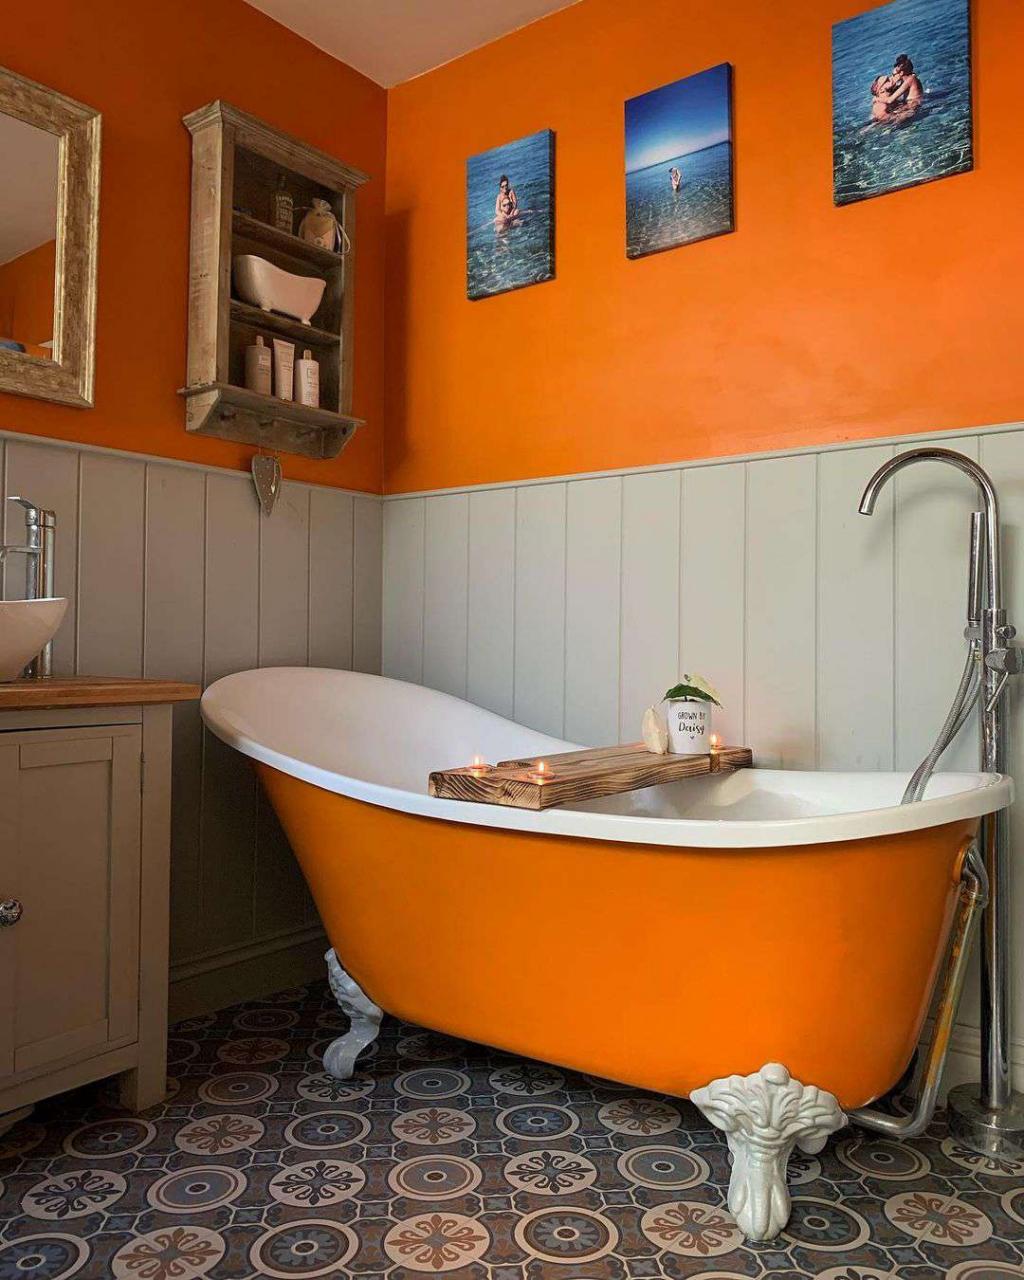 12 Ways to Use Orange in a Bathroom